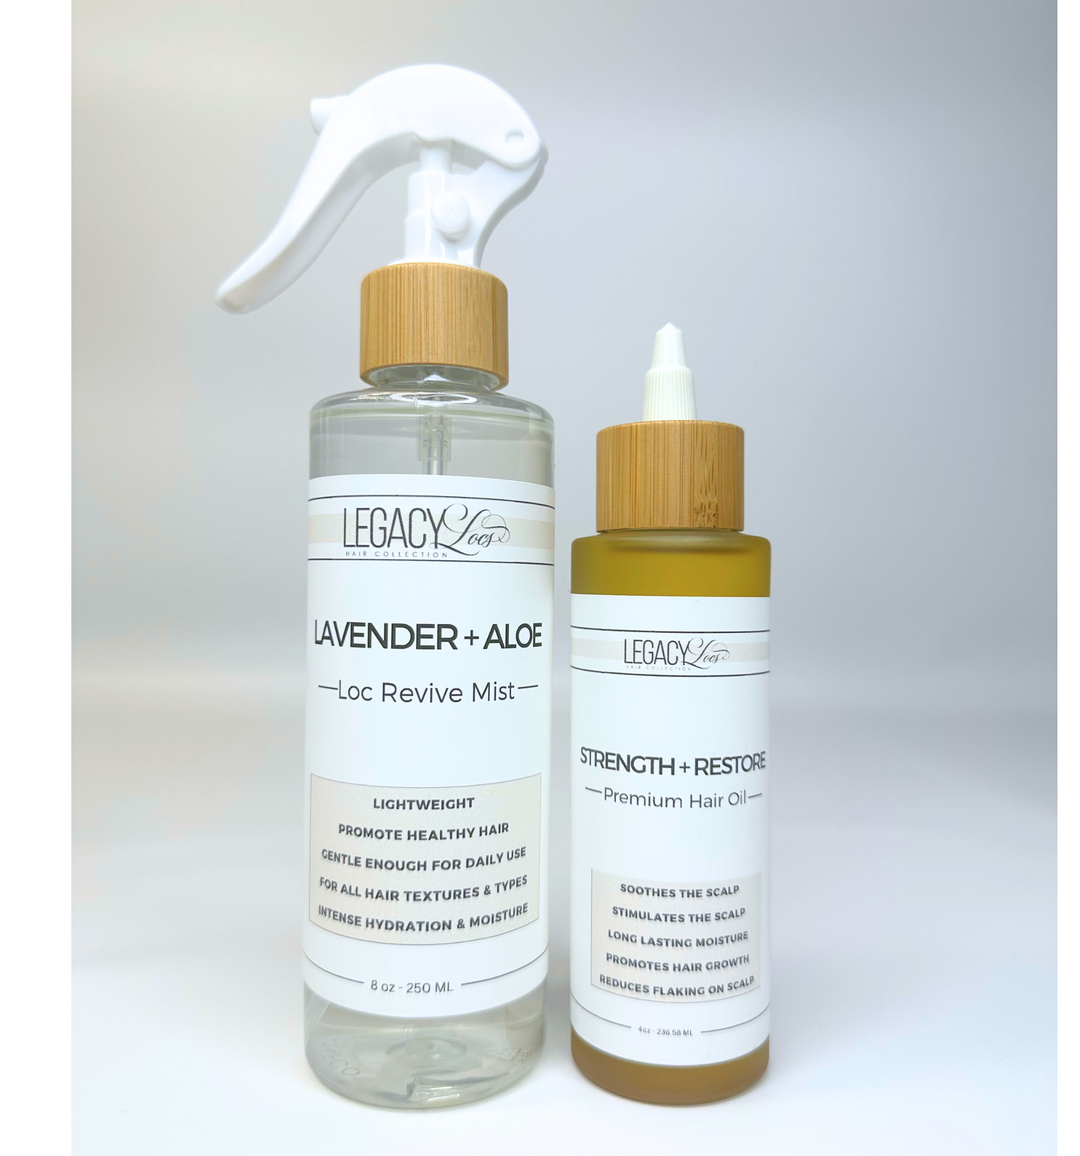 Lavender + Aloe Loc Revive Mist /Strength + Restore Premium Hair Oil Bundles